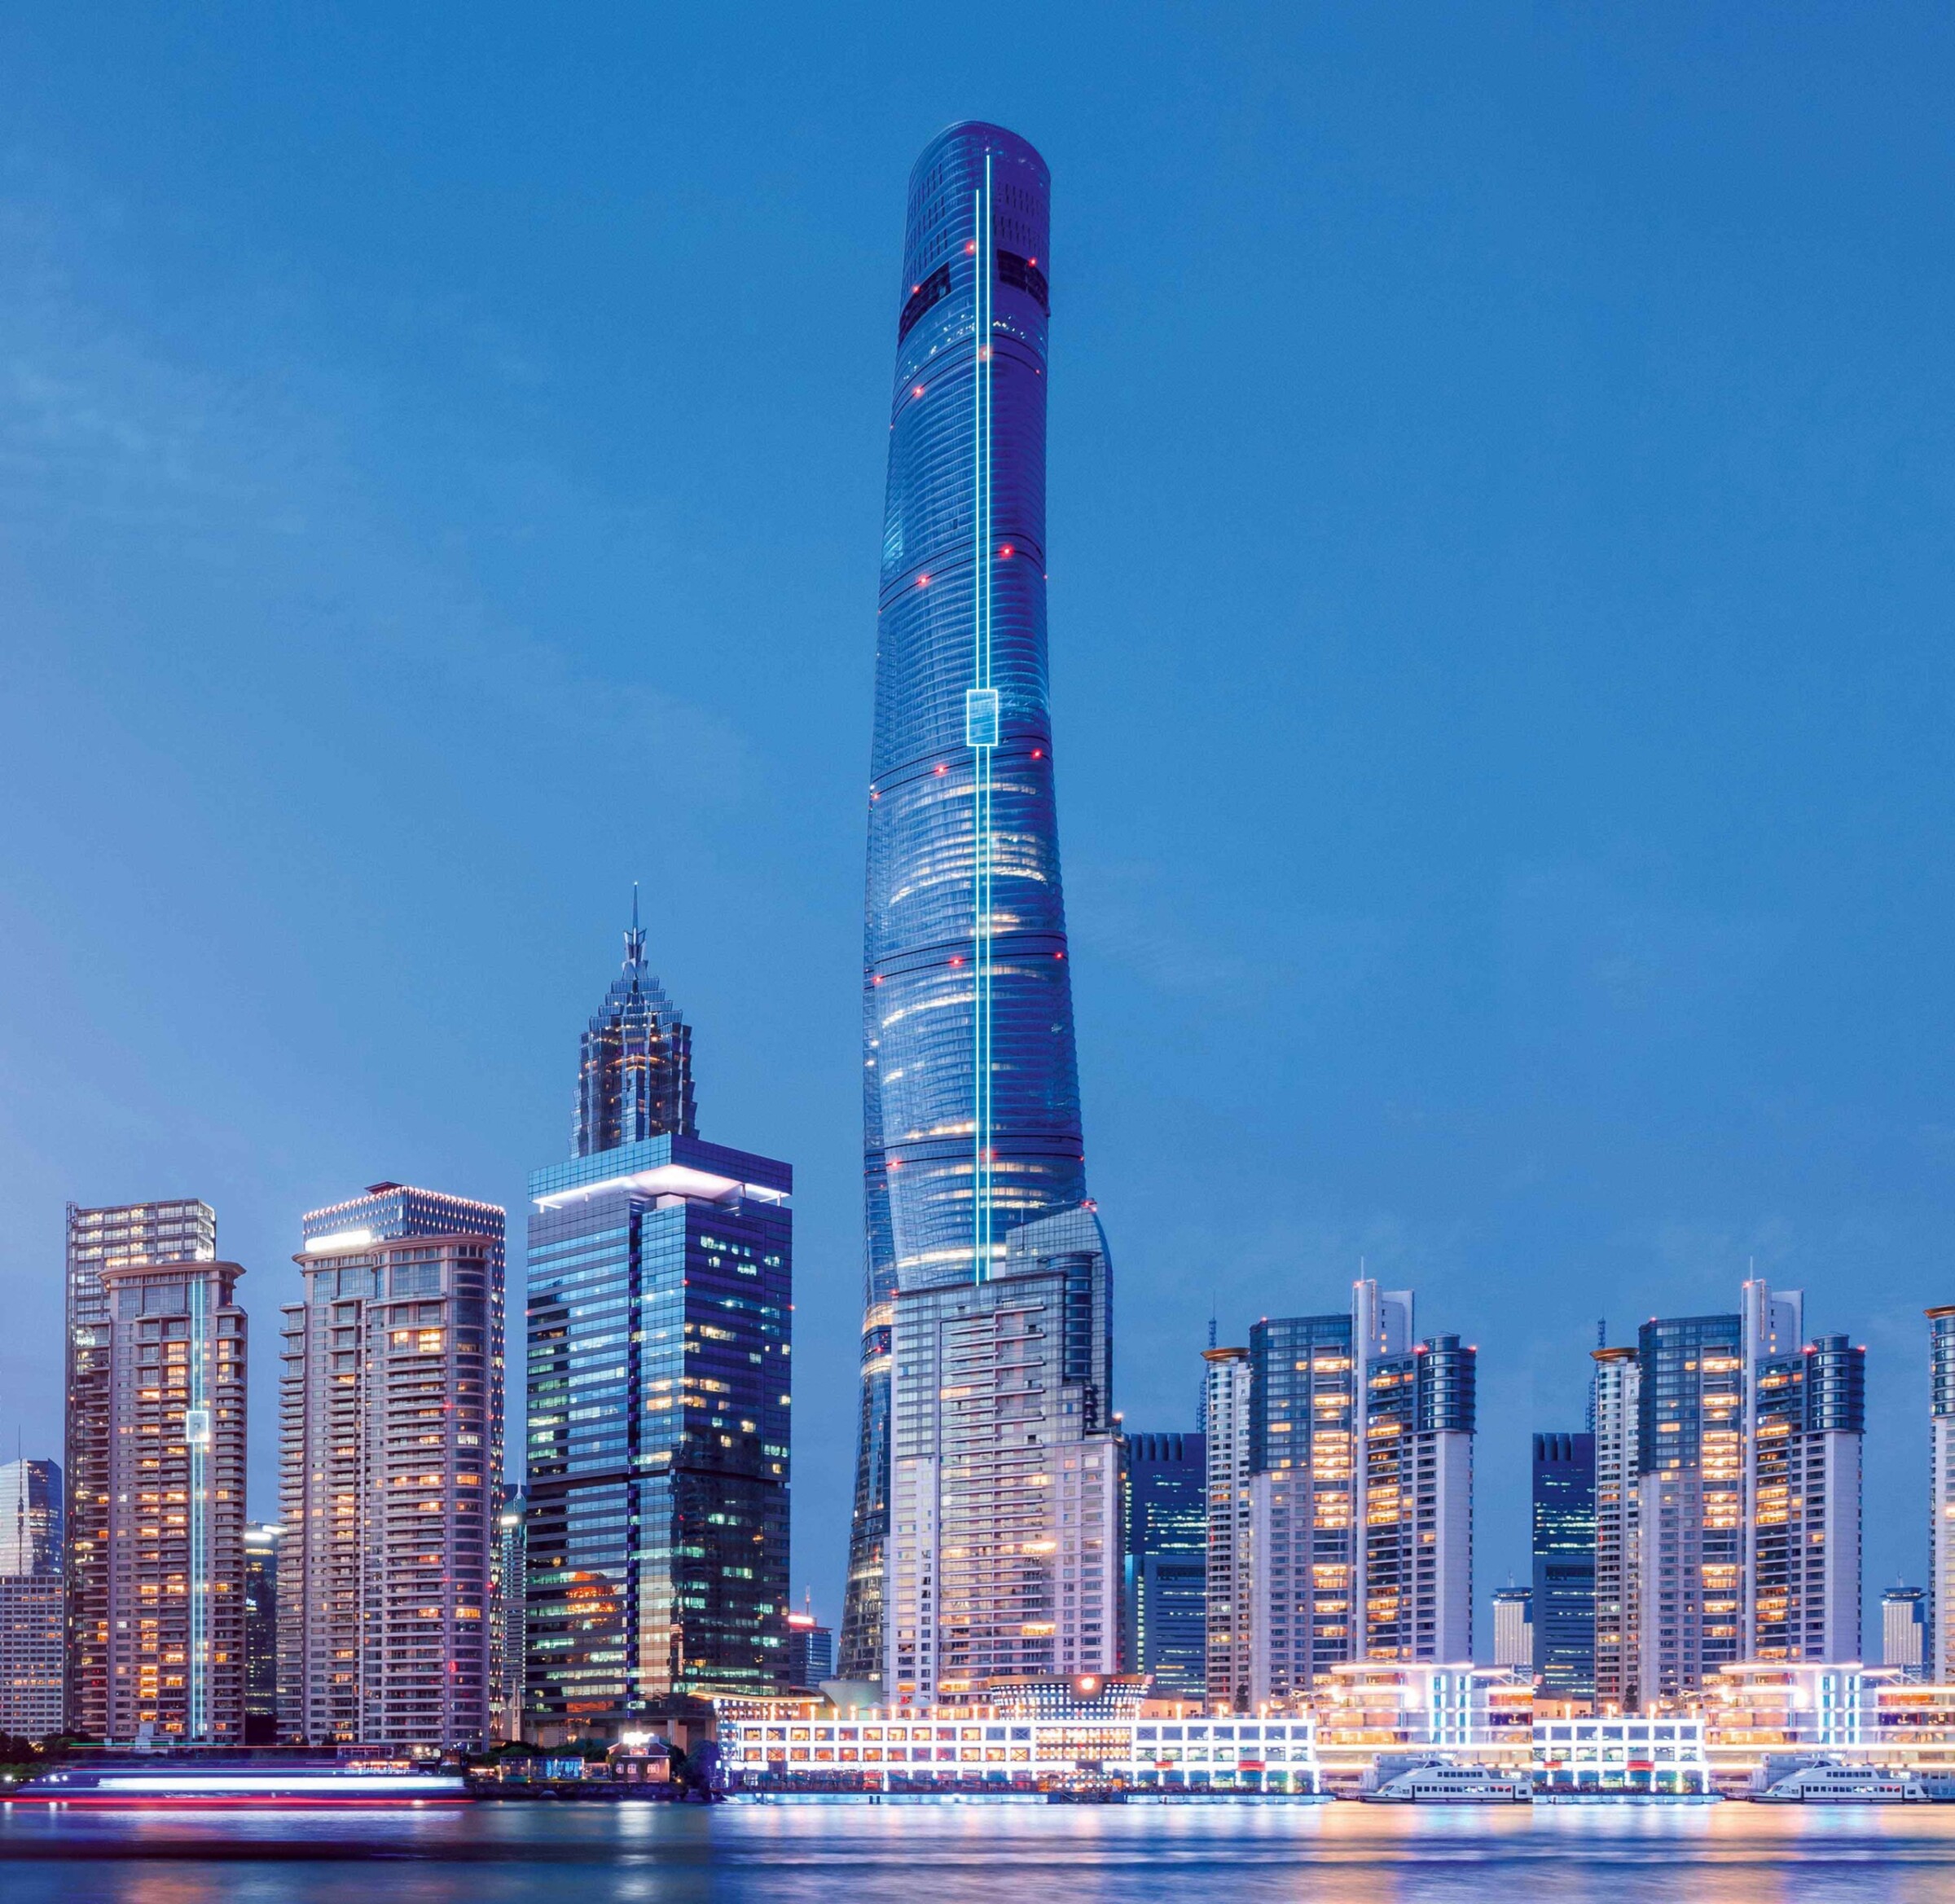 WORLD’S FASTEST LIFT SHANGHAI TOWER 73.8 KM/H